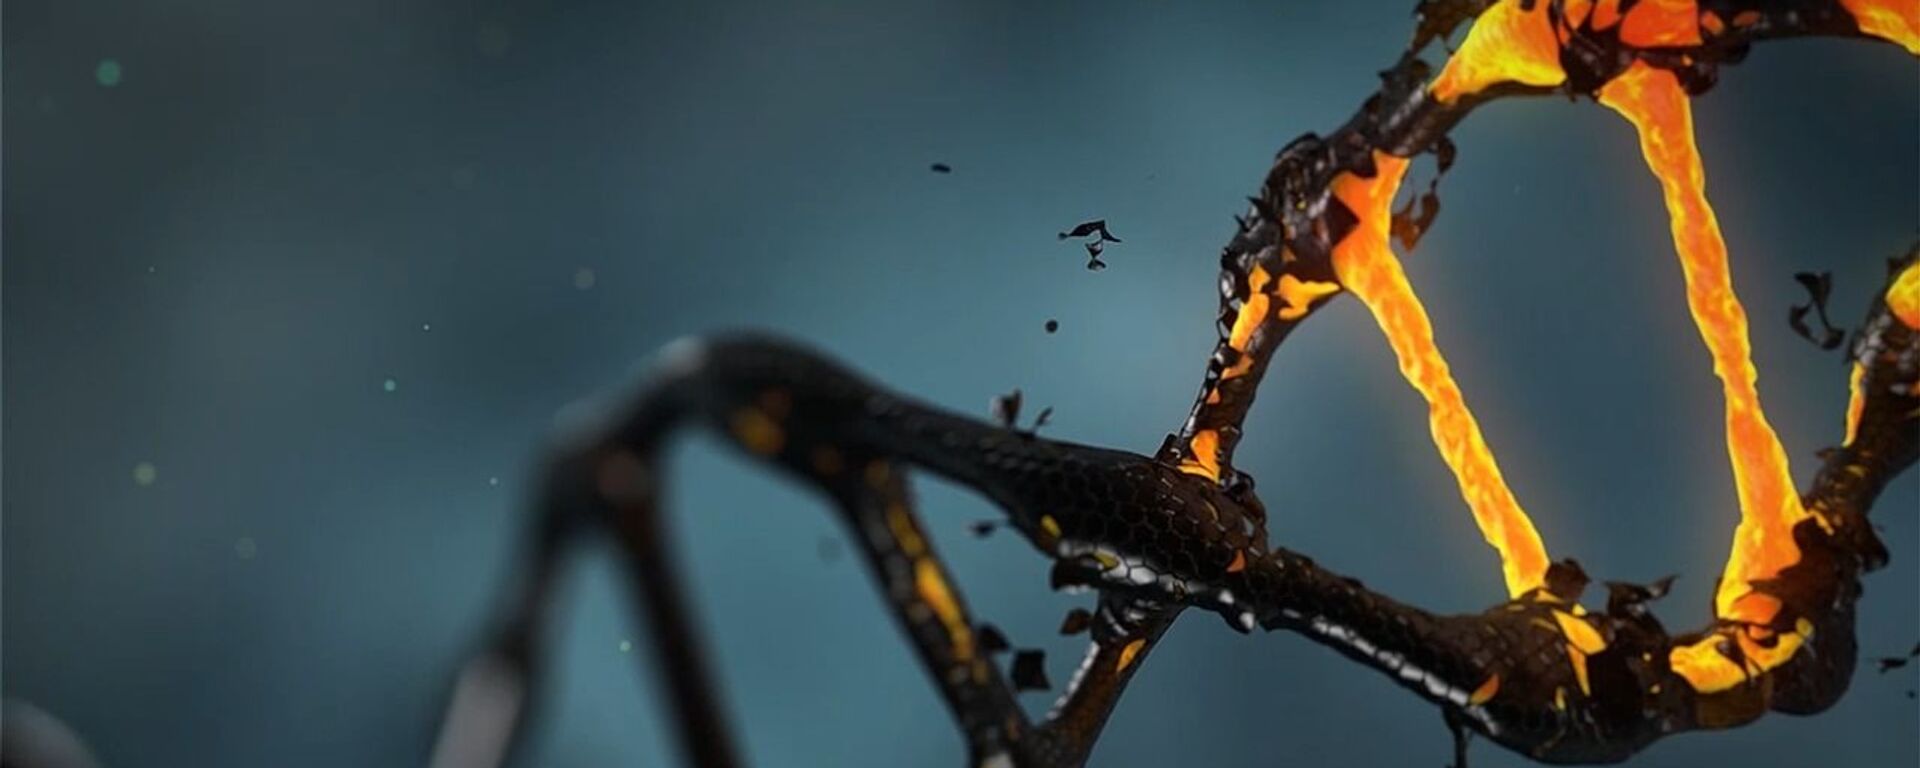 El ADN, imagen referencial - Sputnik Mundo, 1920, 07.12.2019